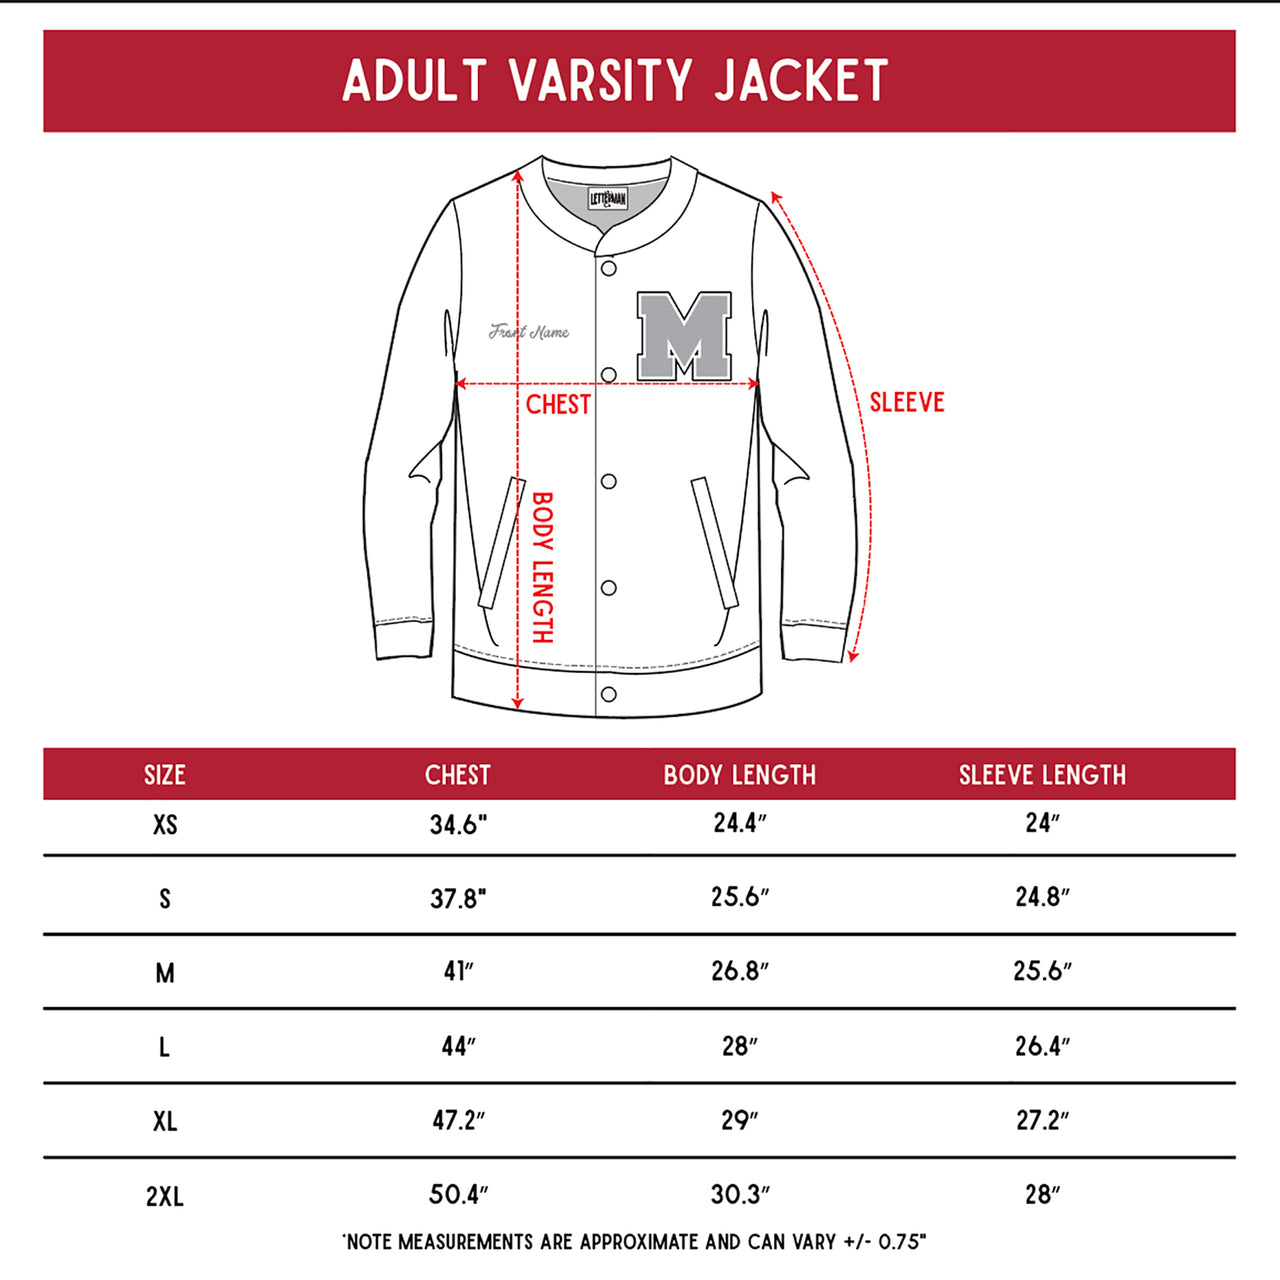 Adult Sweatshirt Varsity Jacket NAVY/BURGUNDY